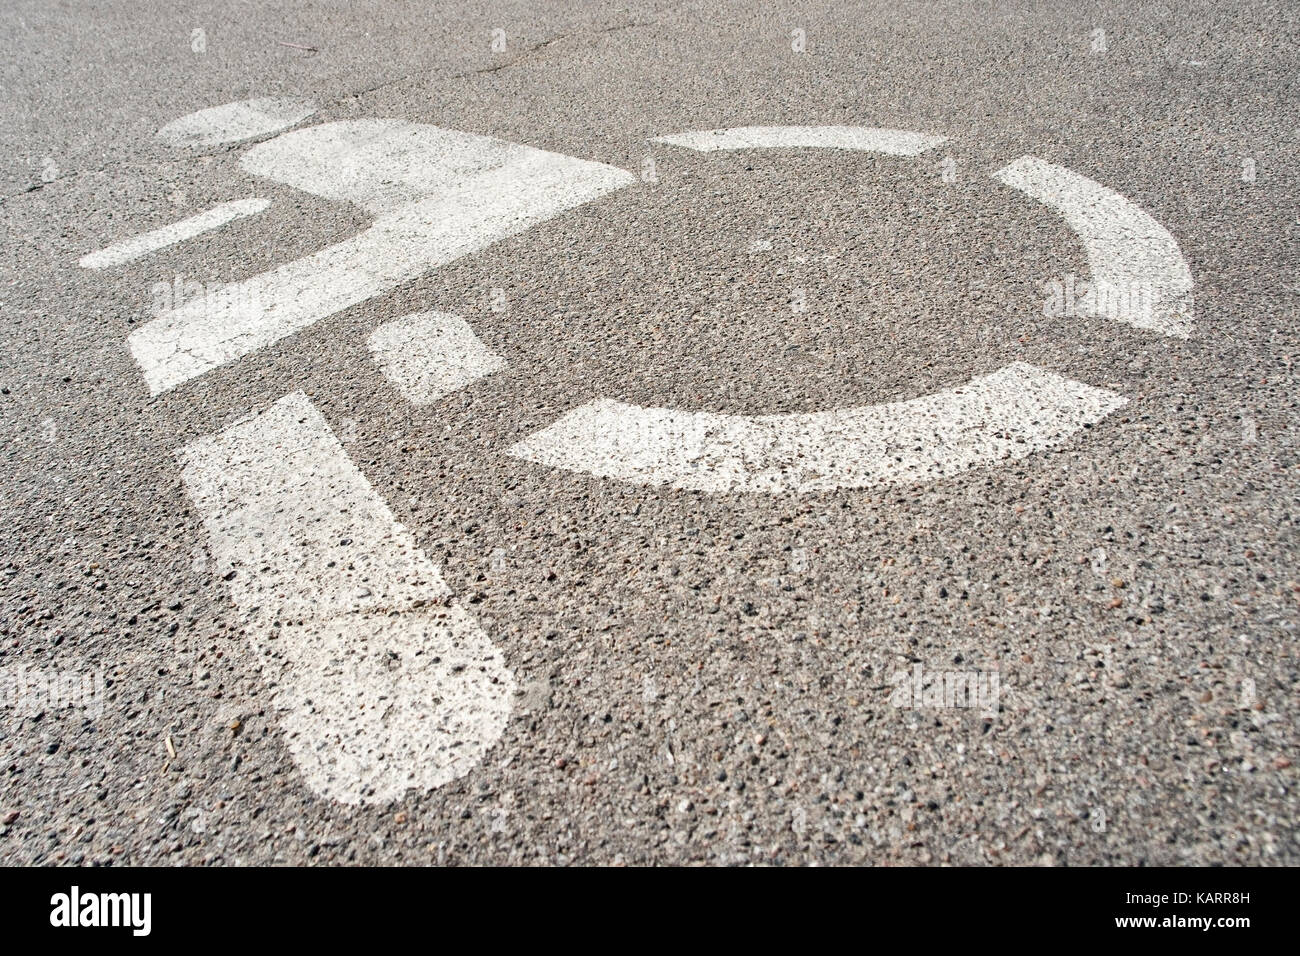 Damp, parking space for the disabled, Behindertenparkplatz Stock Photo